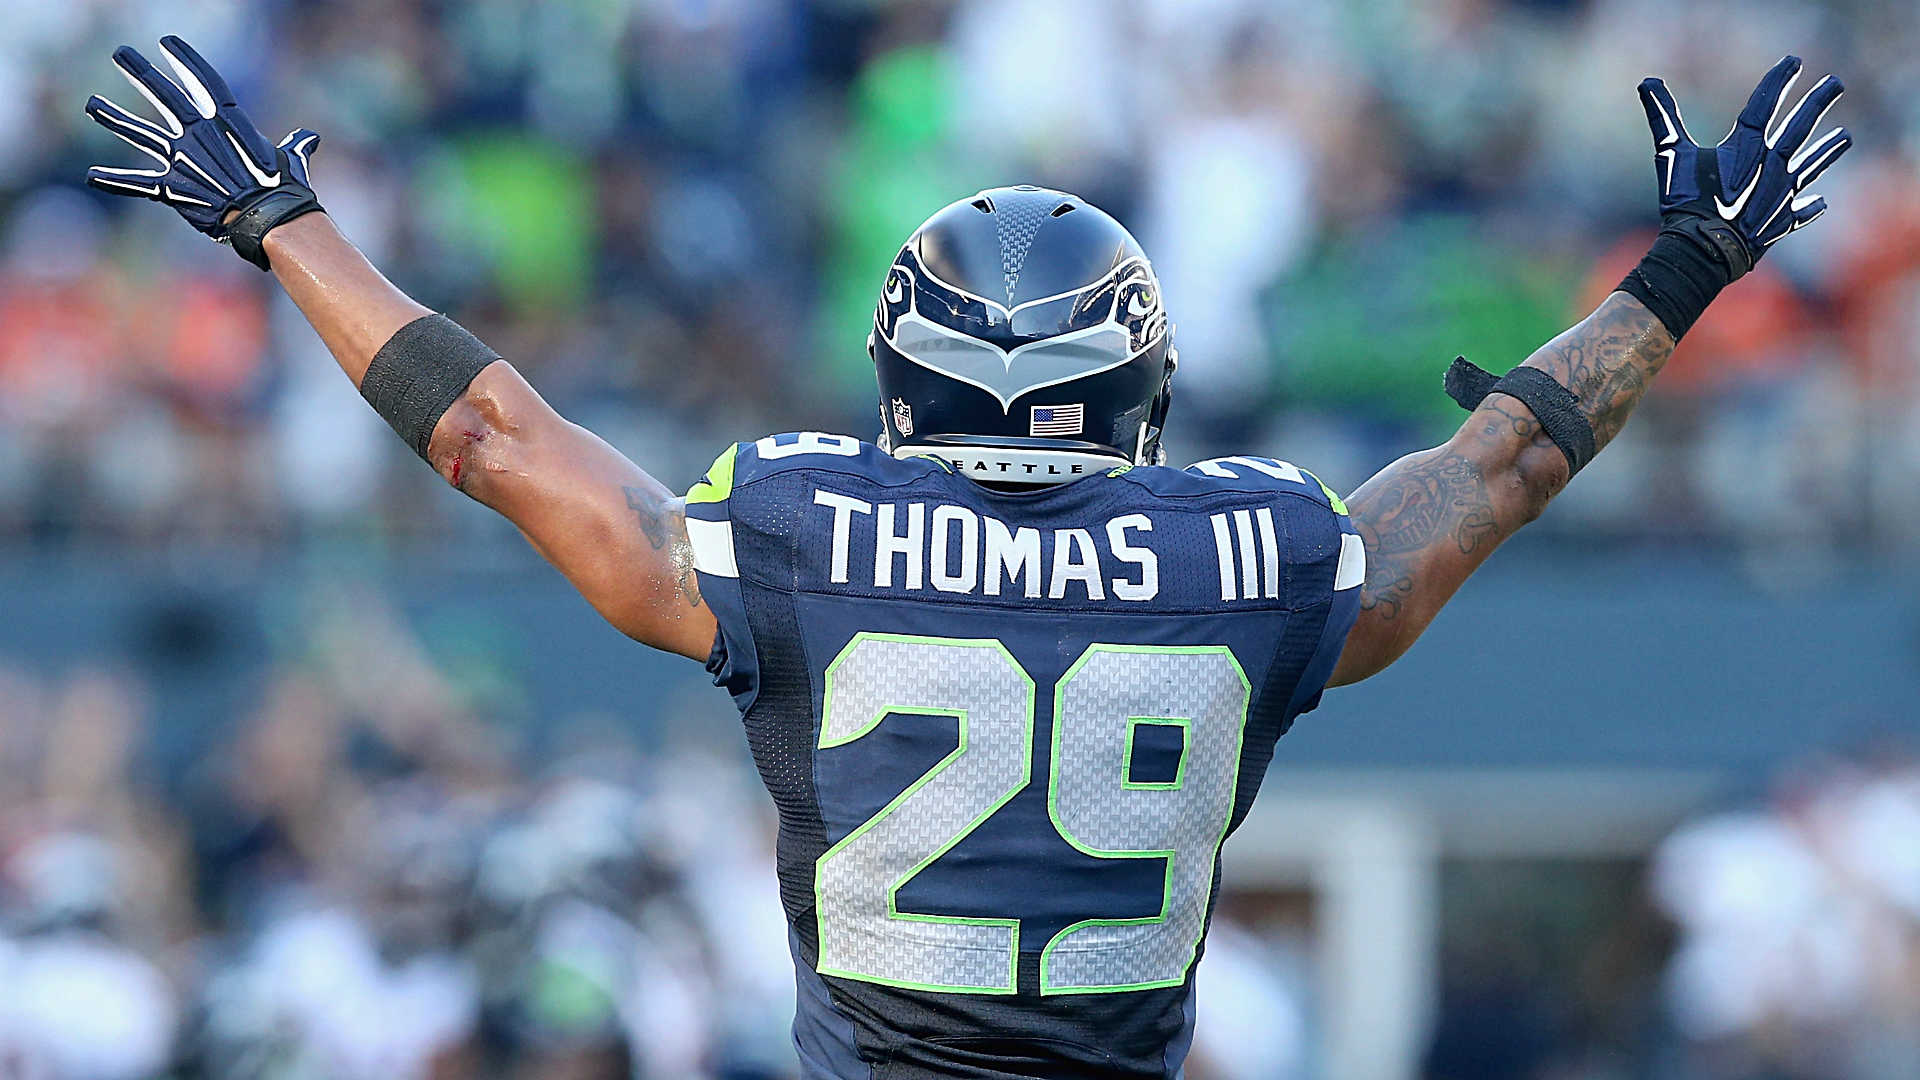 Earl Thomas enjoys reward, challenge of Seahawks' Super Bowl defense